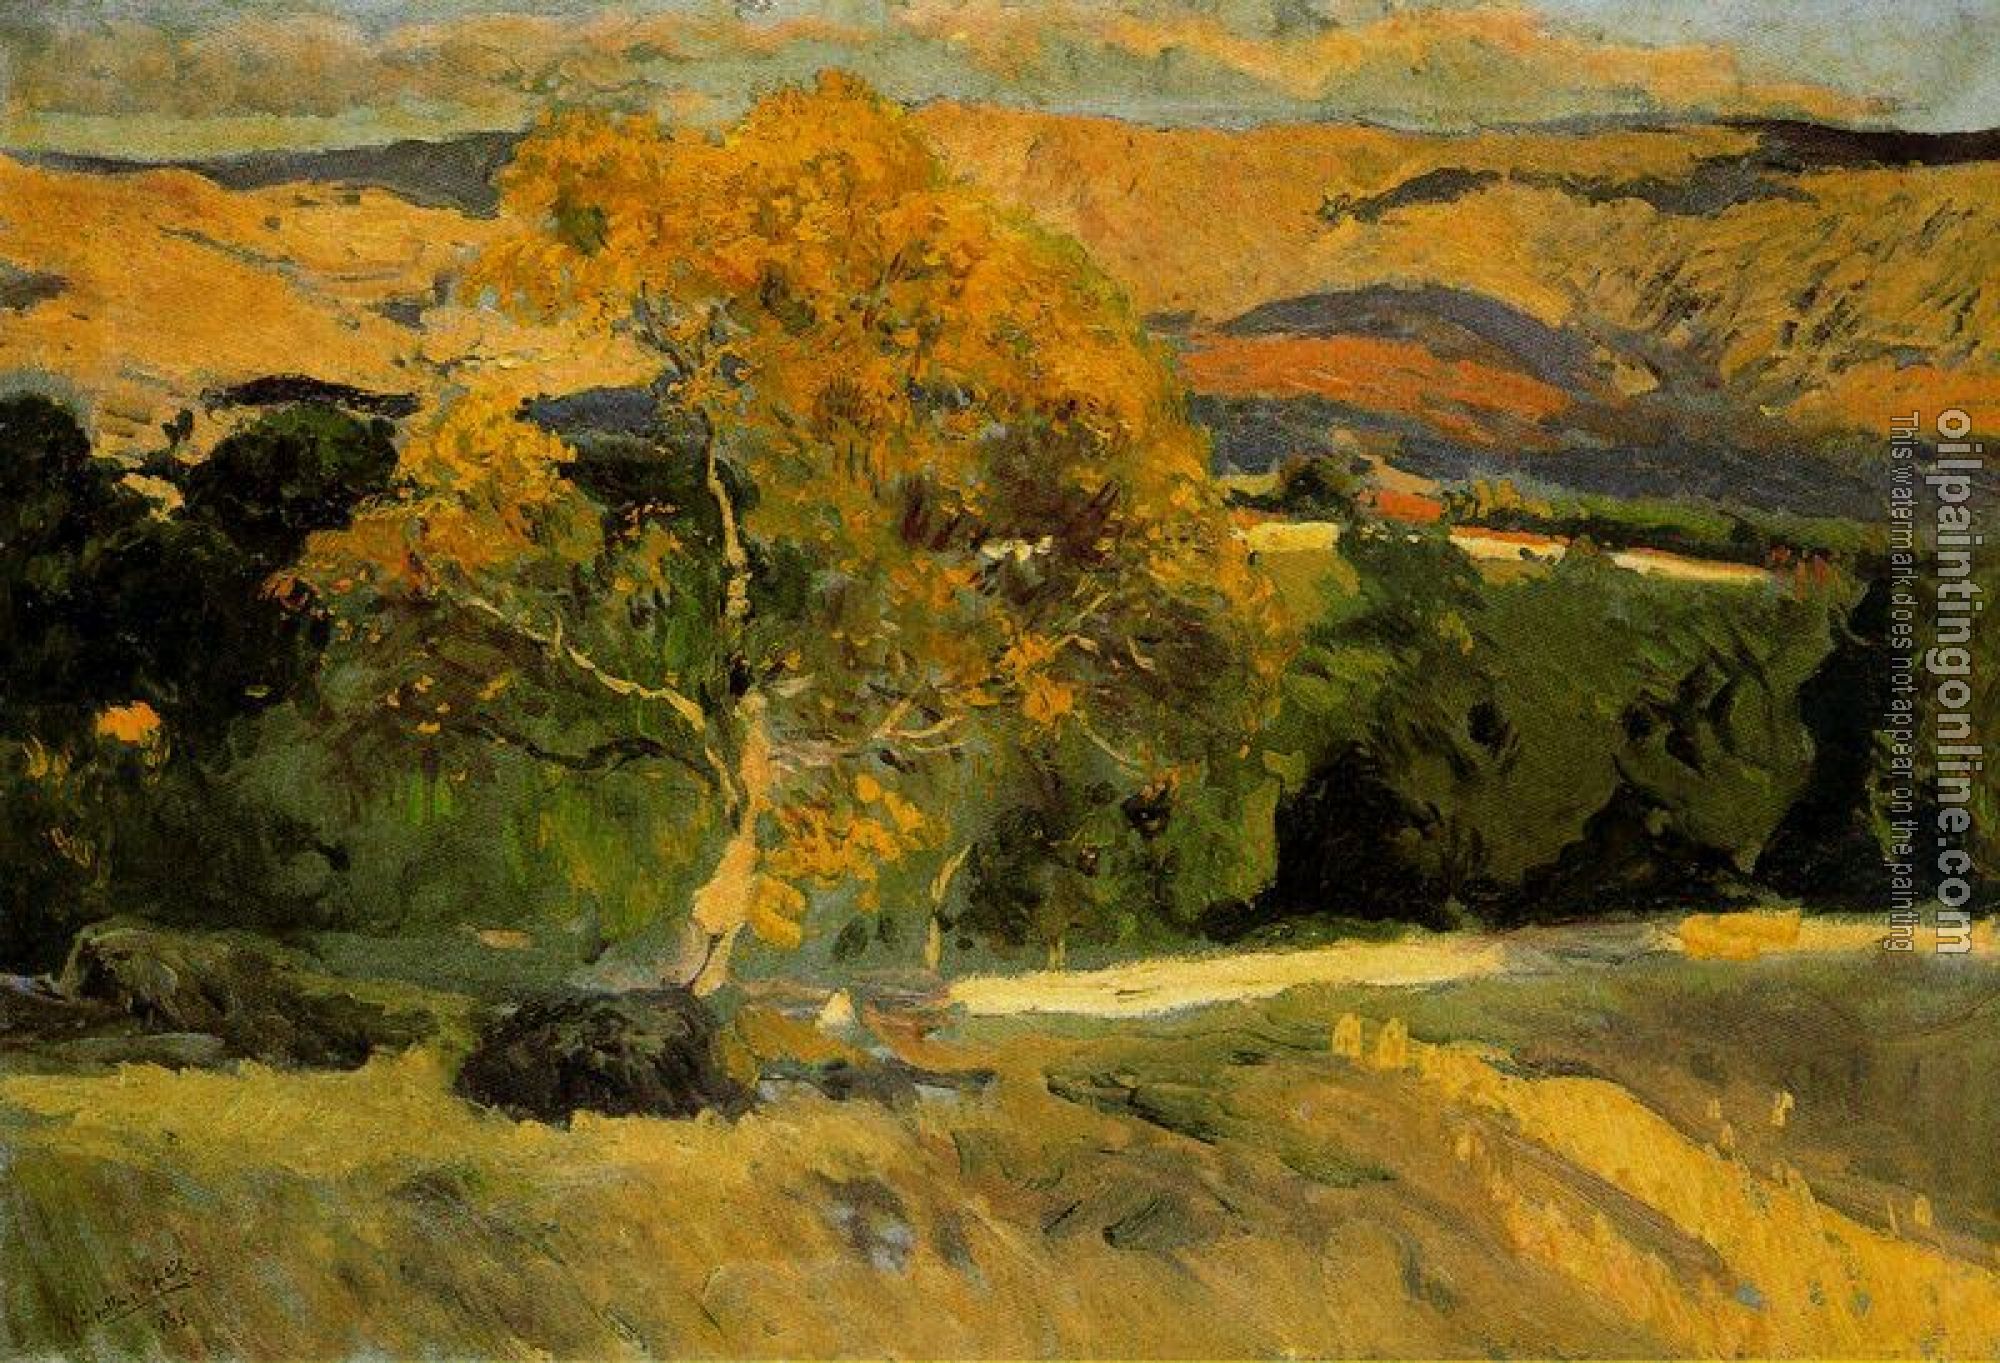 Joaquin Sorolla y Bastida - The Yellow Tree, La Granja